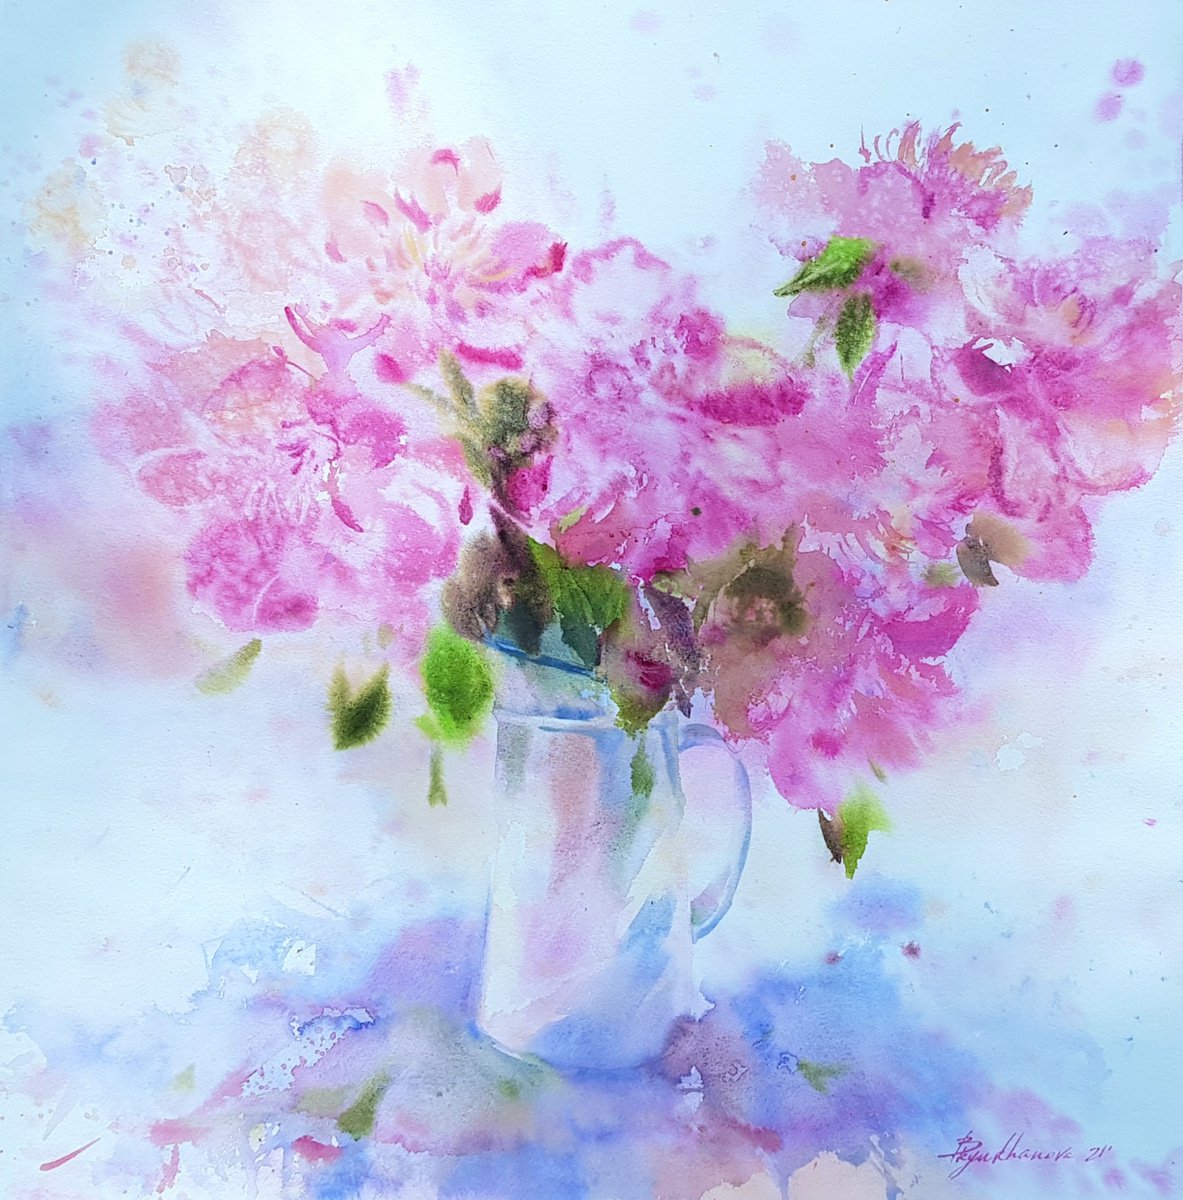 Pink peonies. Pink flowers painting. Watercolor. by Mariana Briukhanova